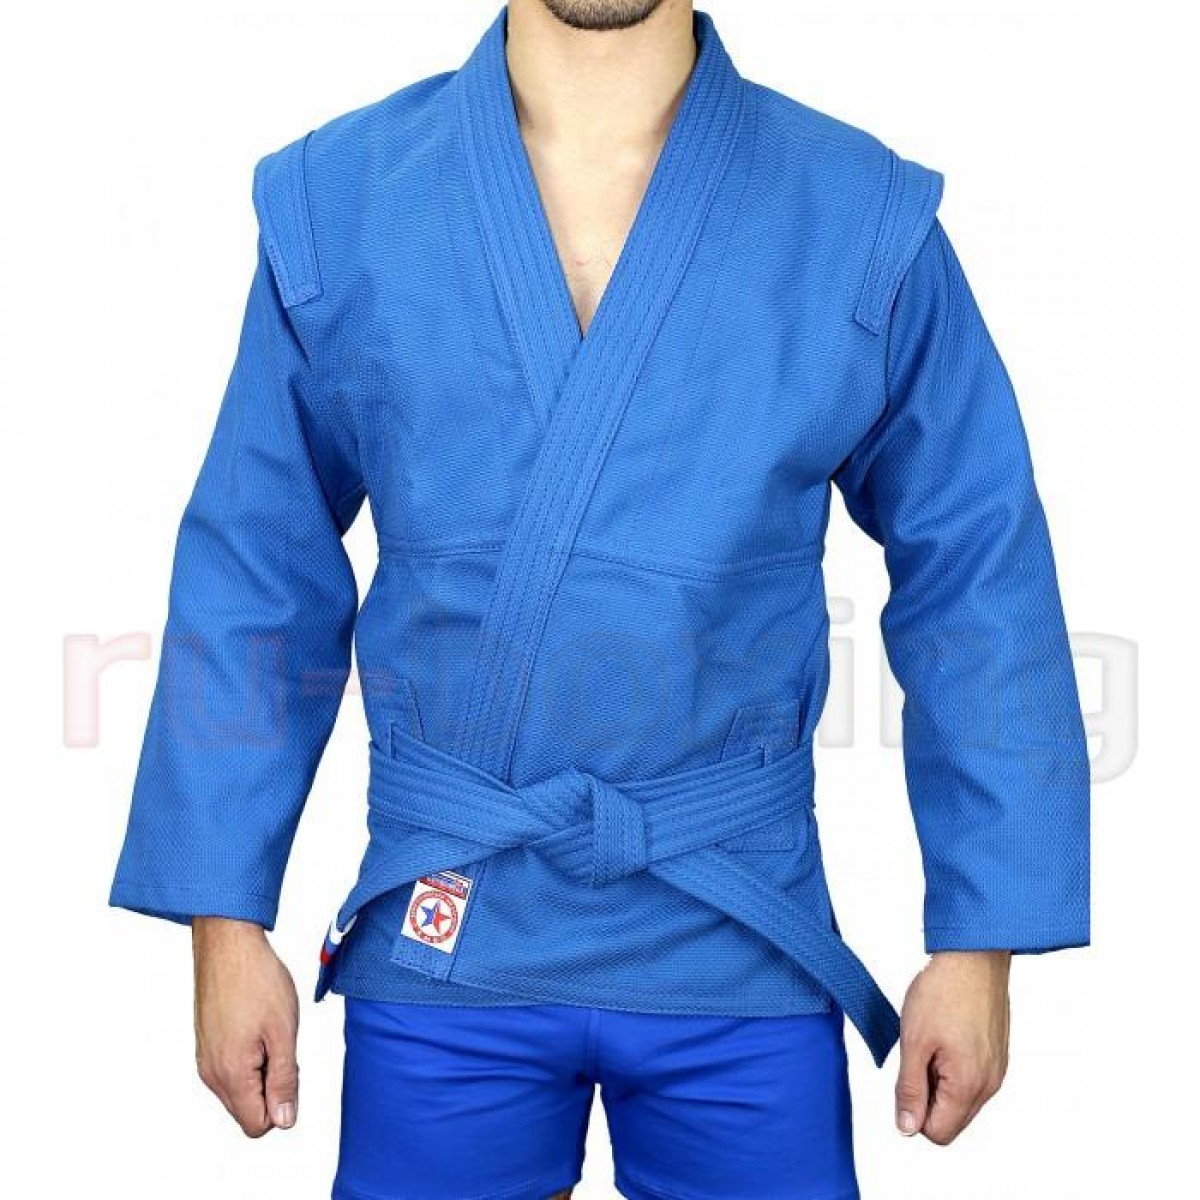 Куртка для самбо Атака размер 38 синяя